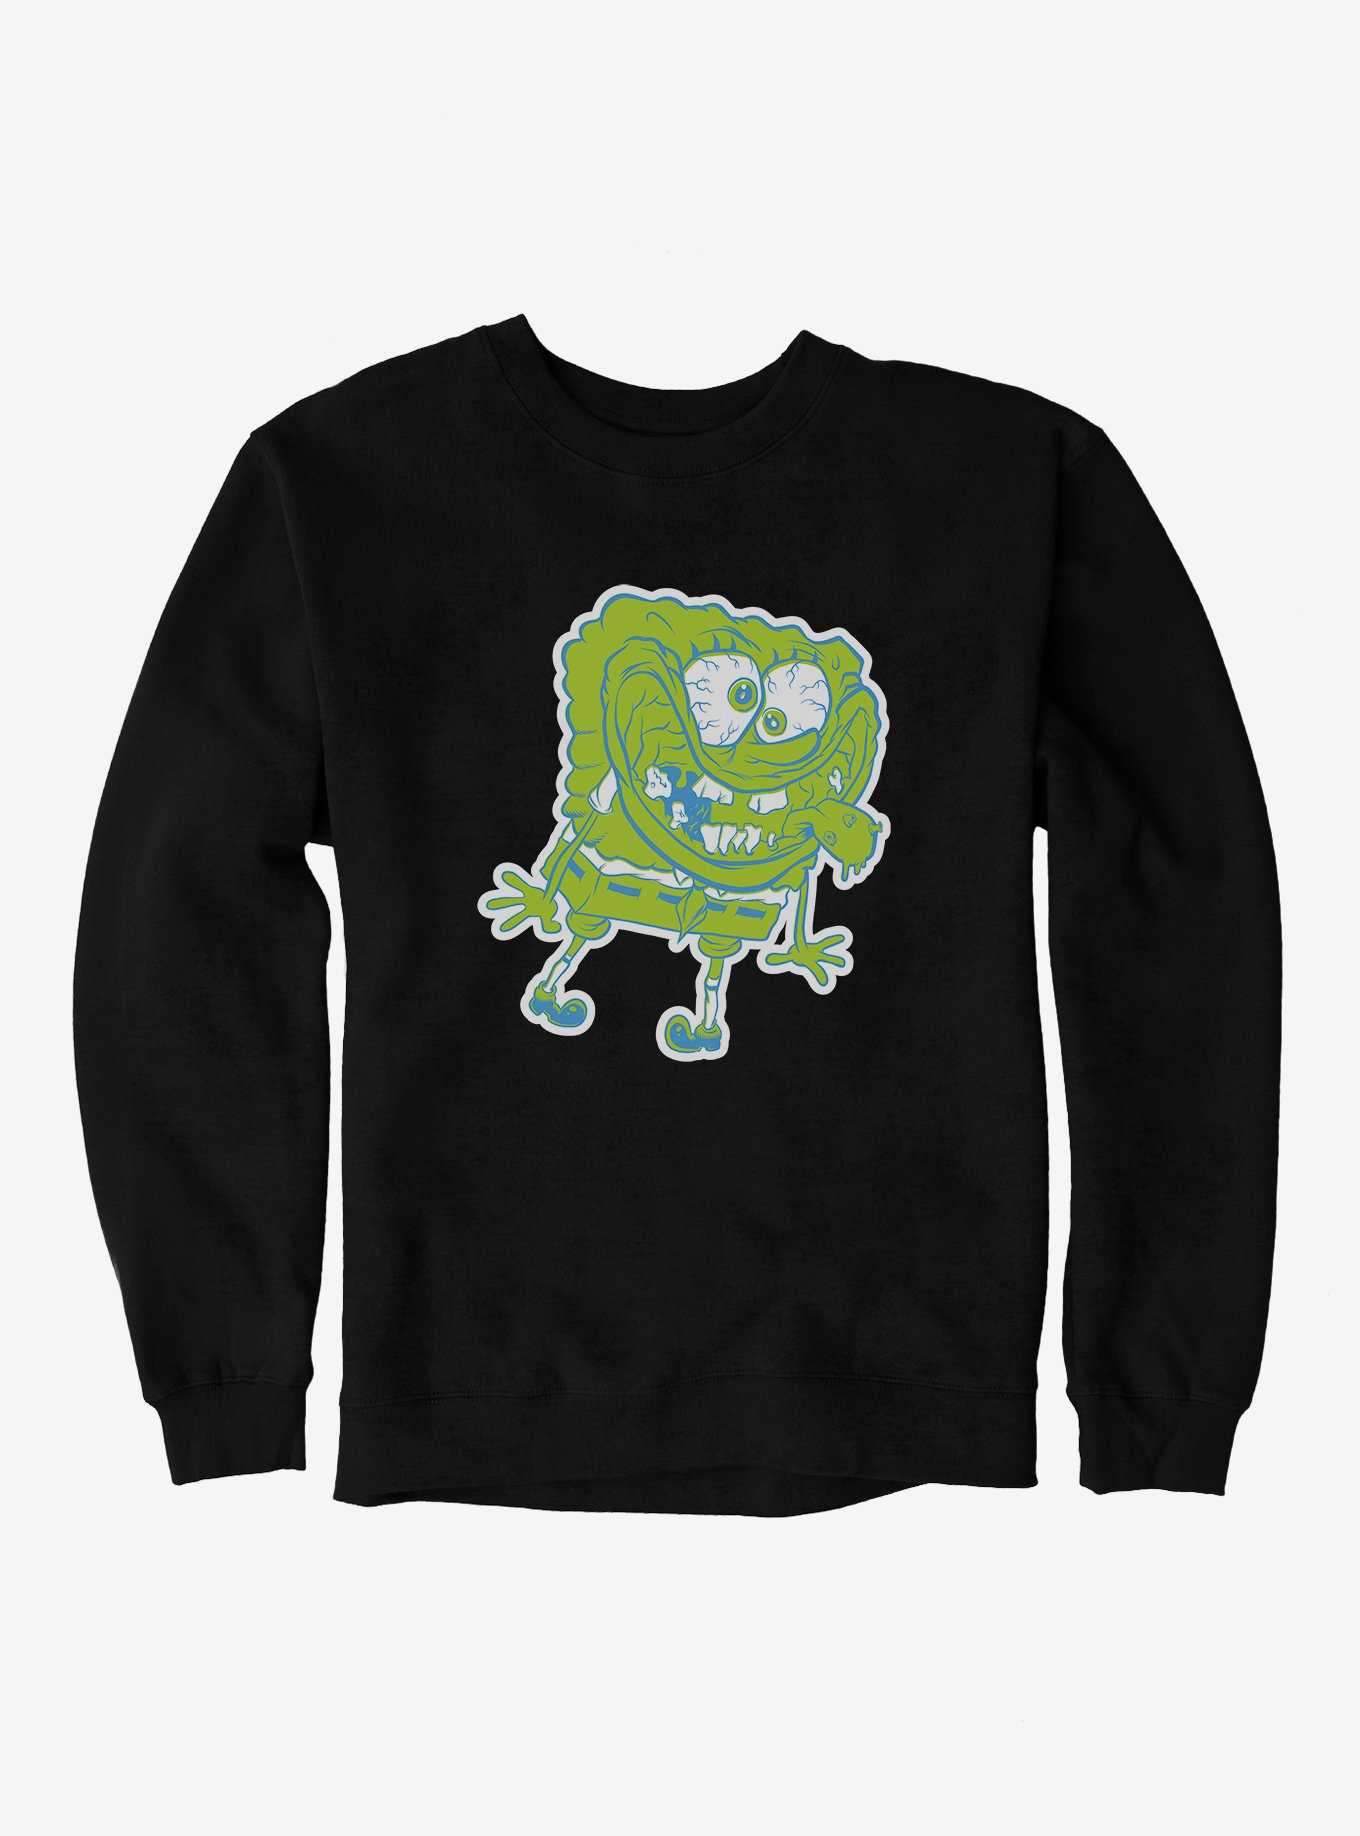 SpongeBob SquarePants Zombie Sponge Smile Sweatshirt, , hi-res